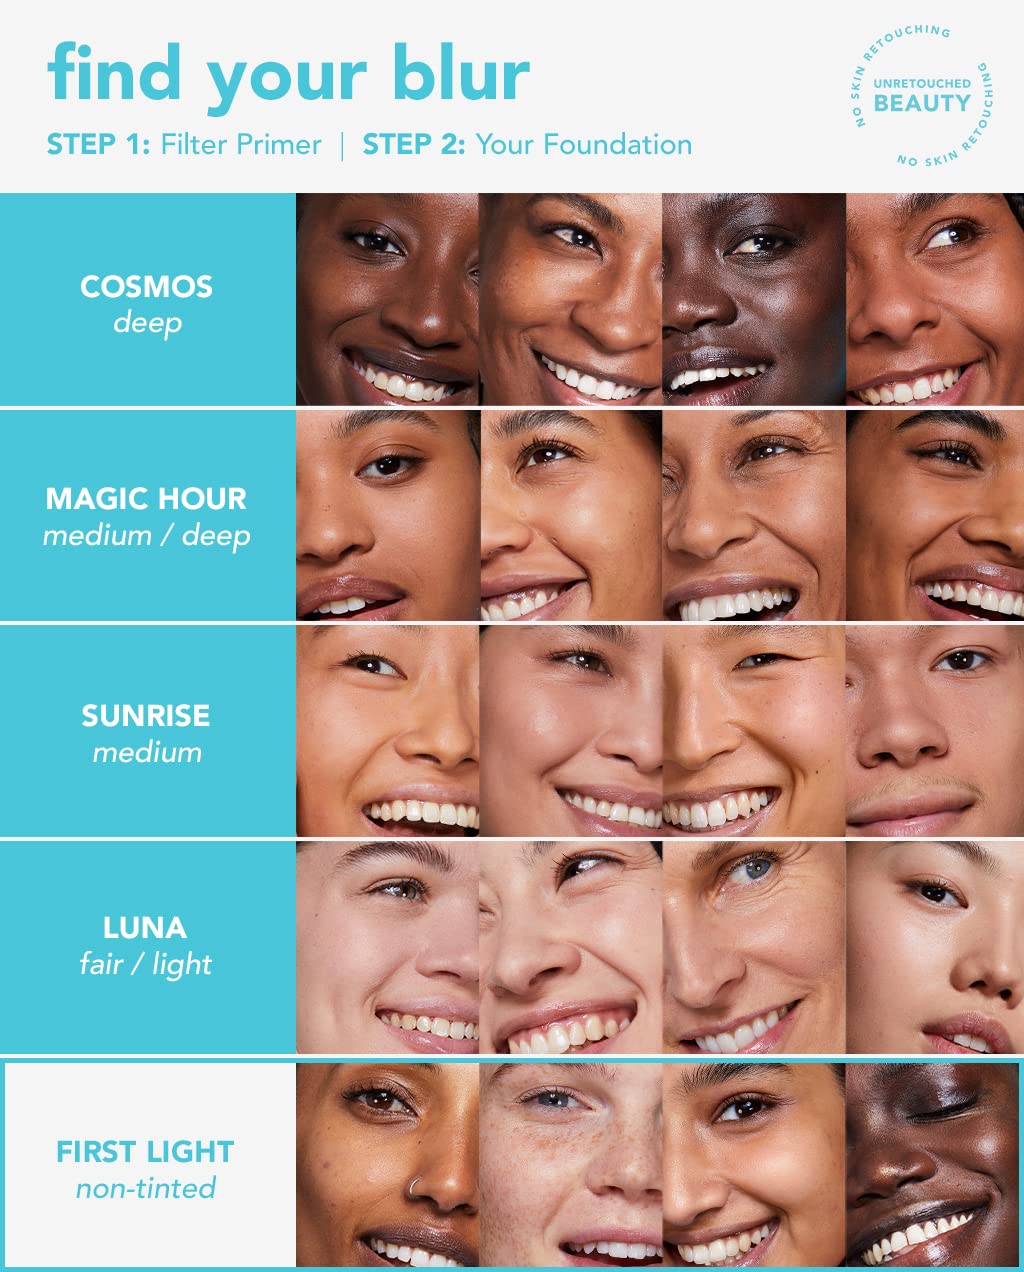 TULA Skin Care Face Filter Blurring and Moisturizing Primer - Original/Sunrise, Evens the Appearance of Skin Tone & Redness, Hydrates & Improves Makeup Wear, 1fl oz